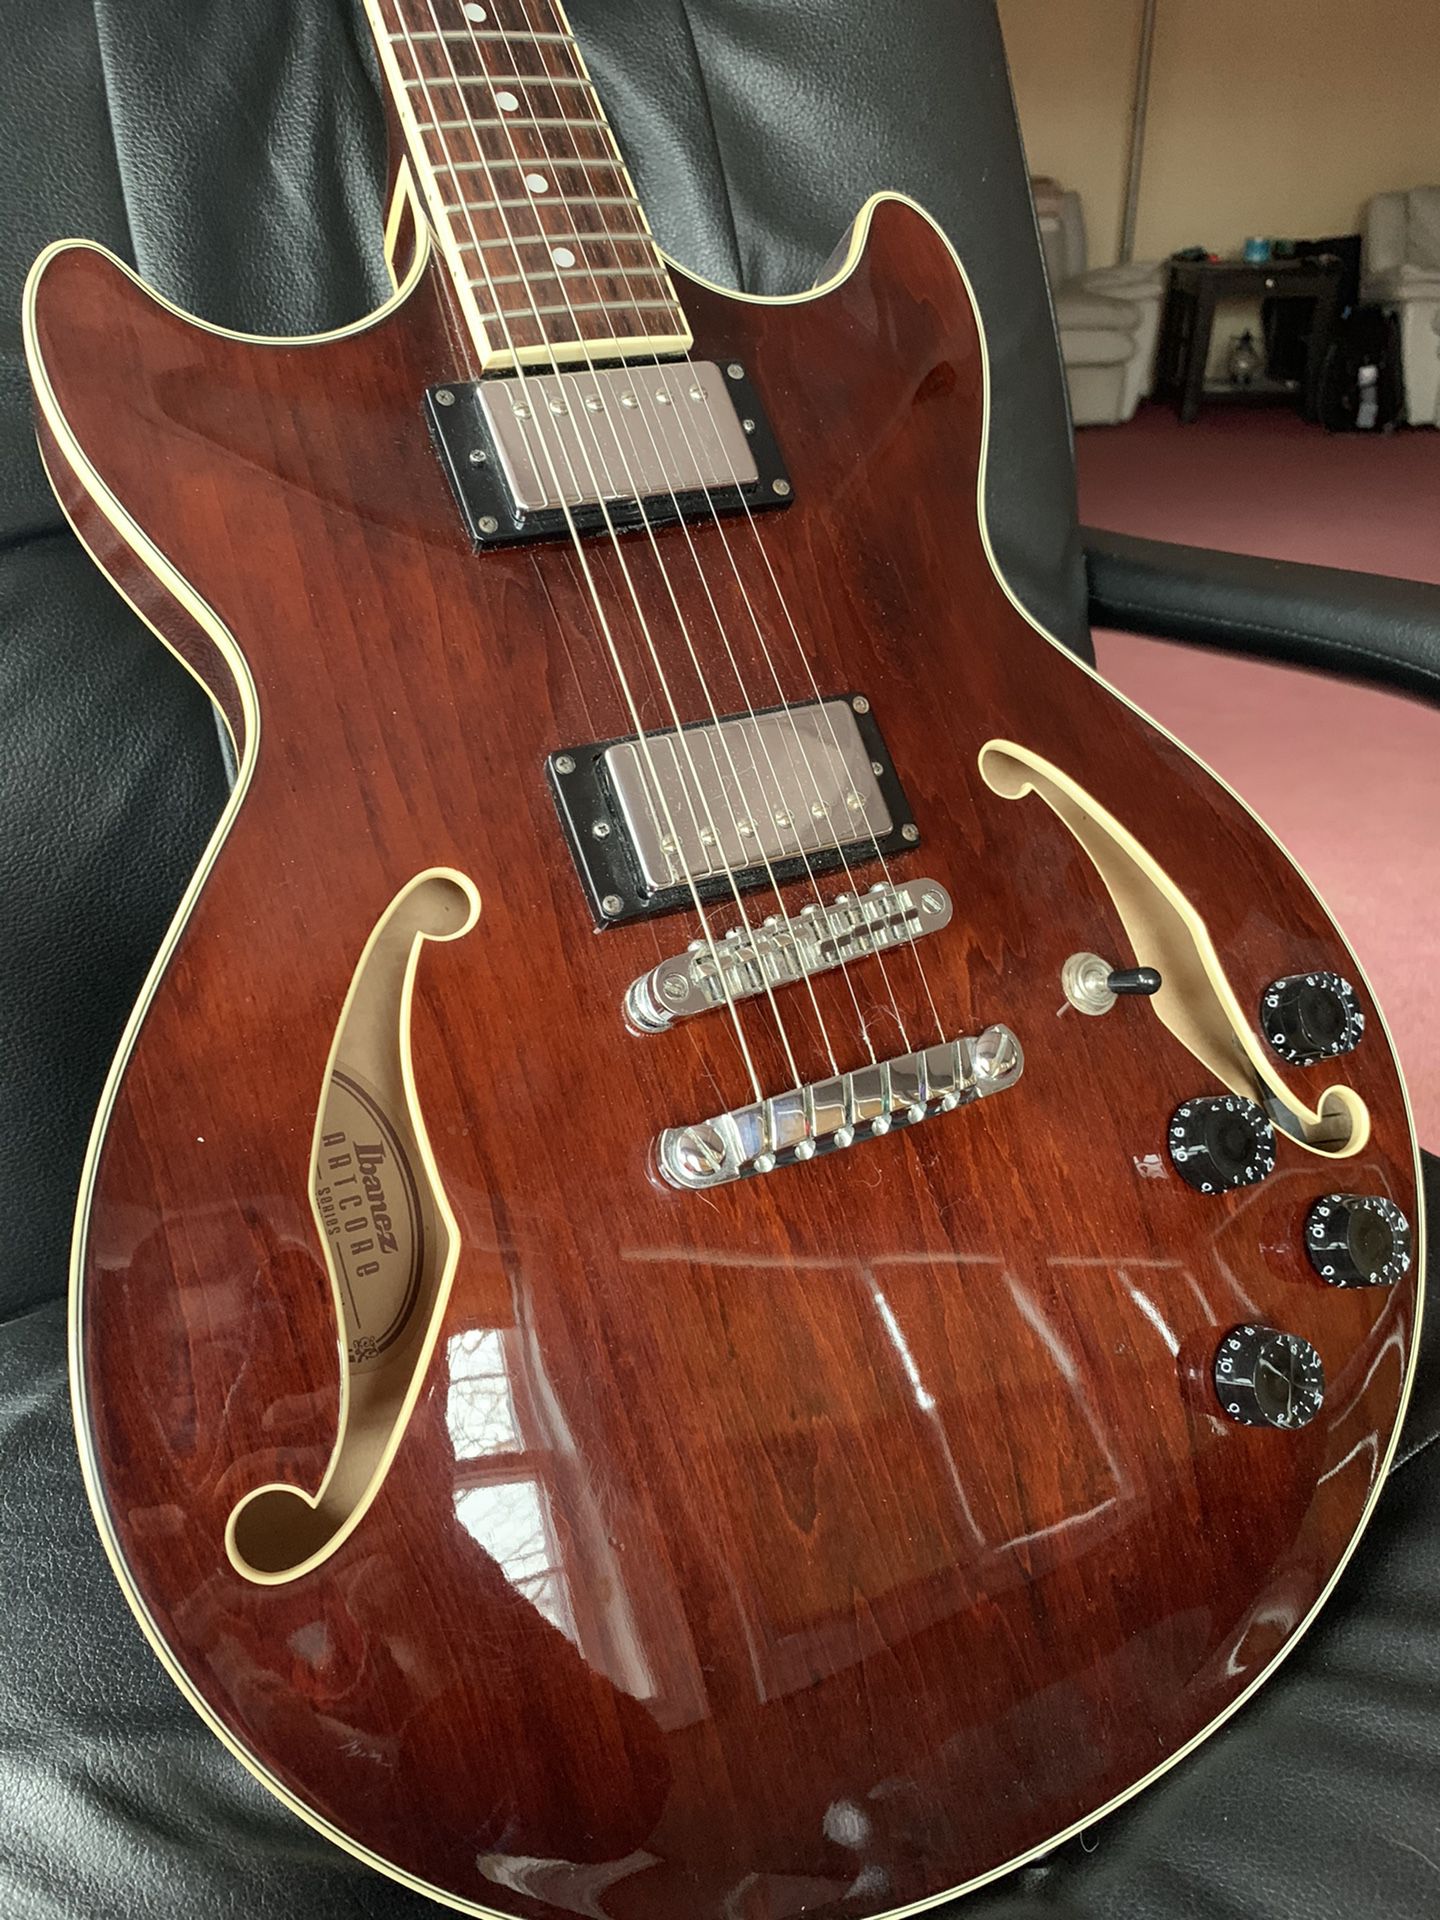 Ibanez semi-hollow body guitar- $225